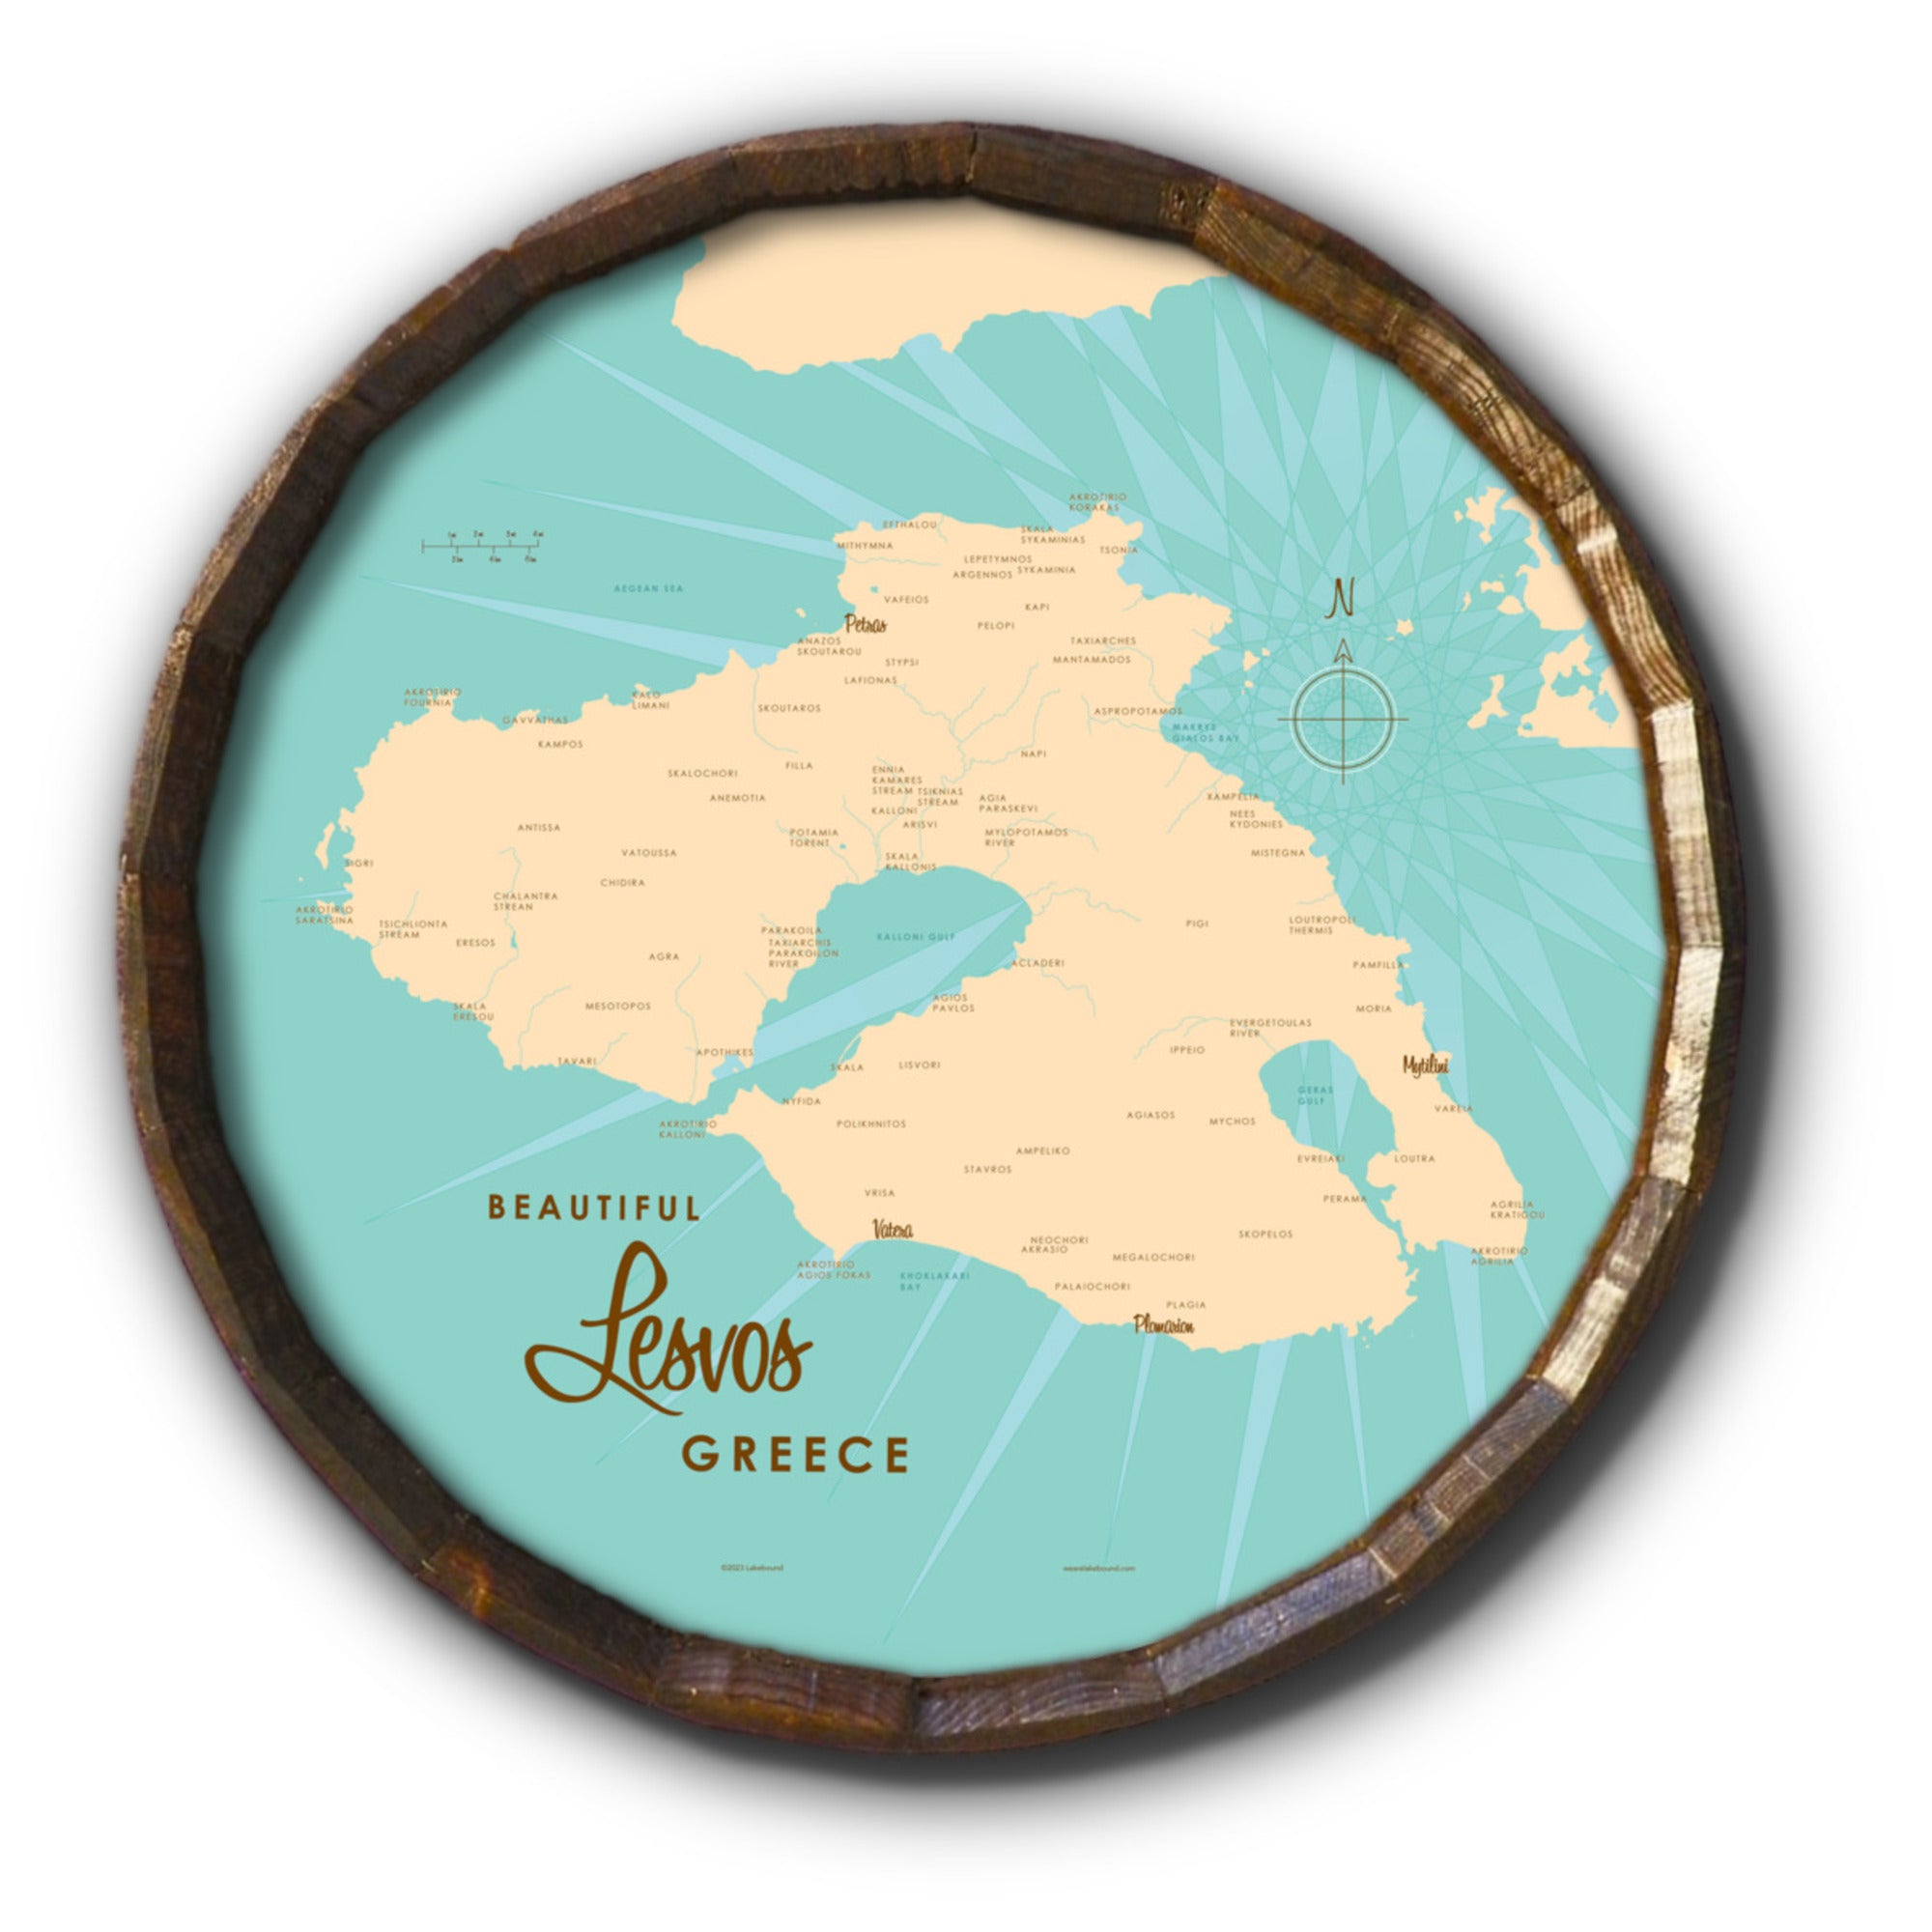 Lesvos Greece, Barrel End Map Art